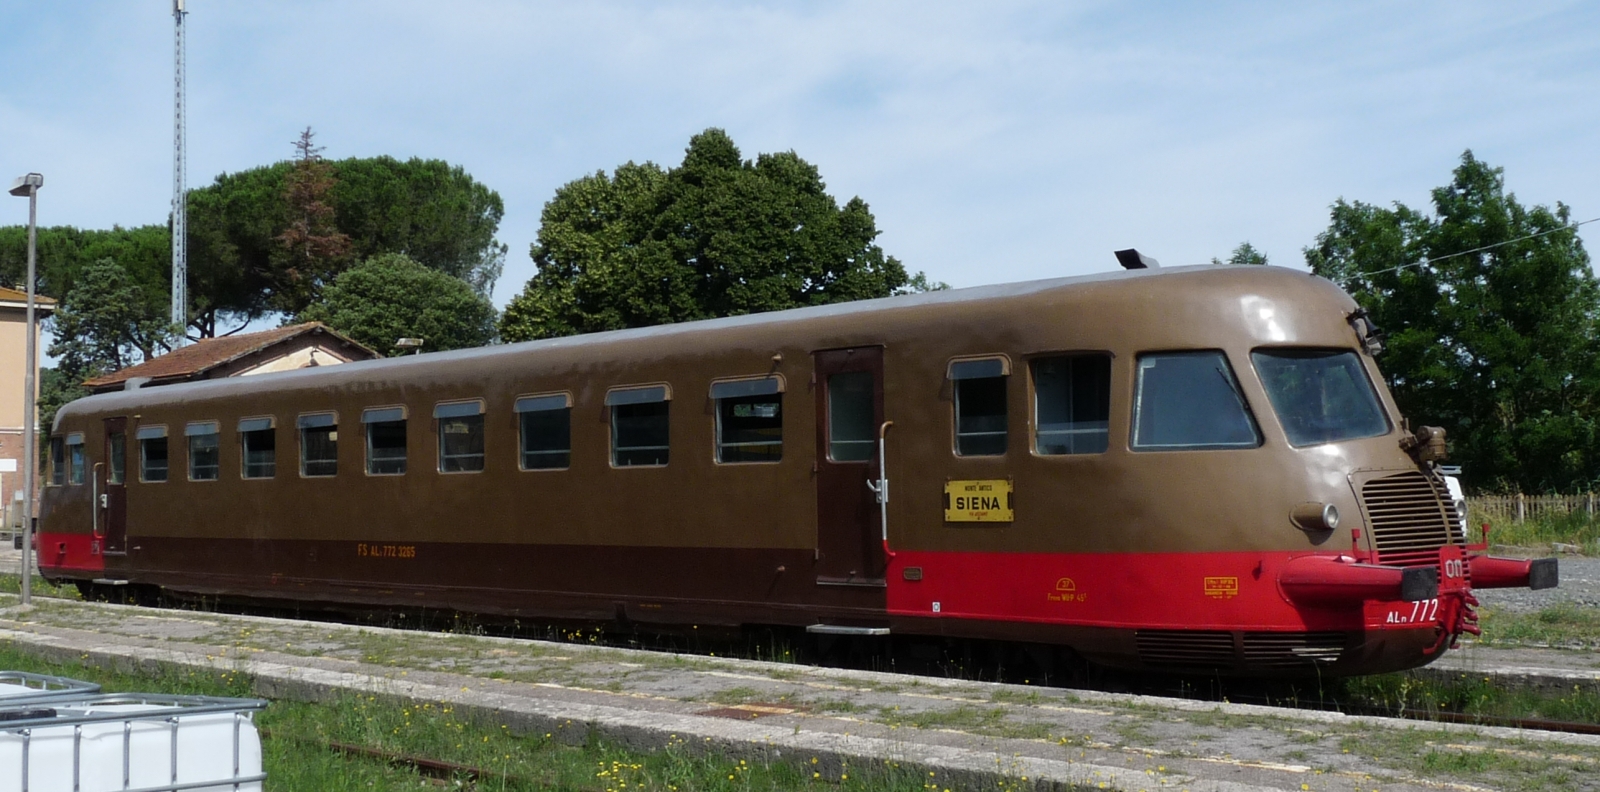 Preserved museum locomotive near Siena